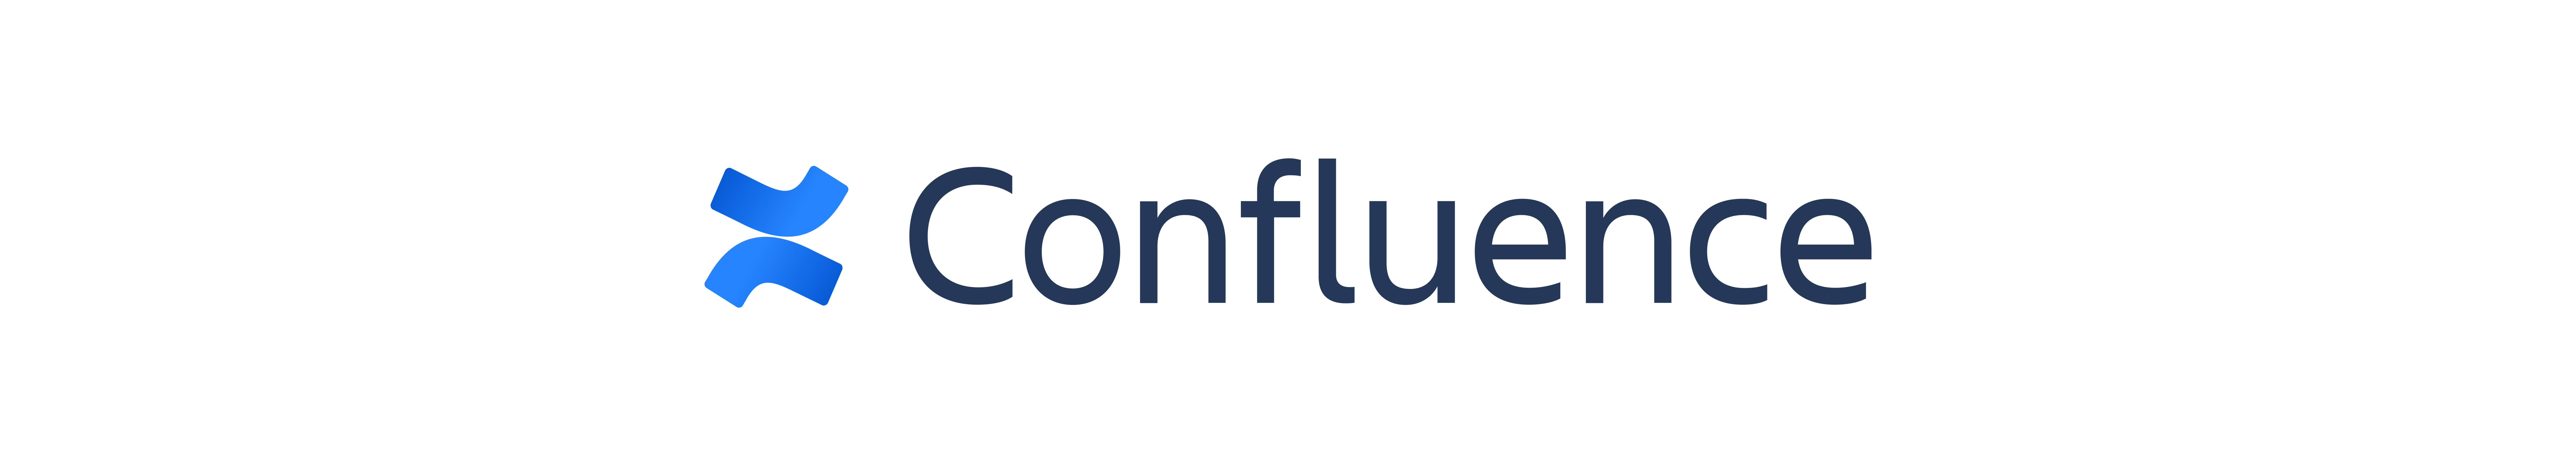 Confluence-standard_logo